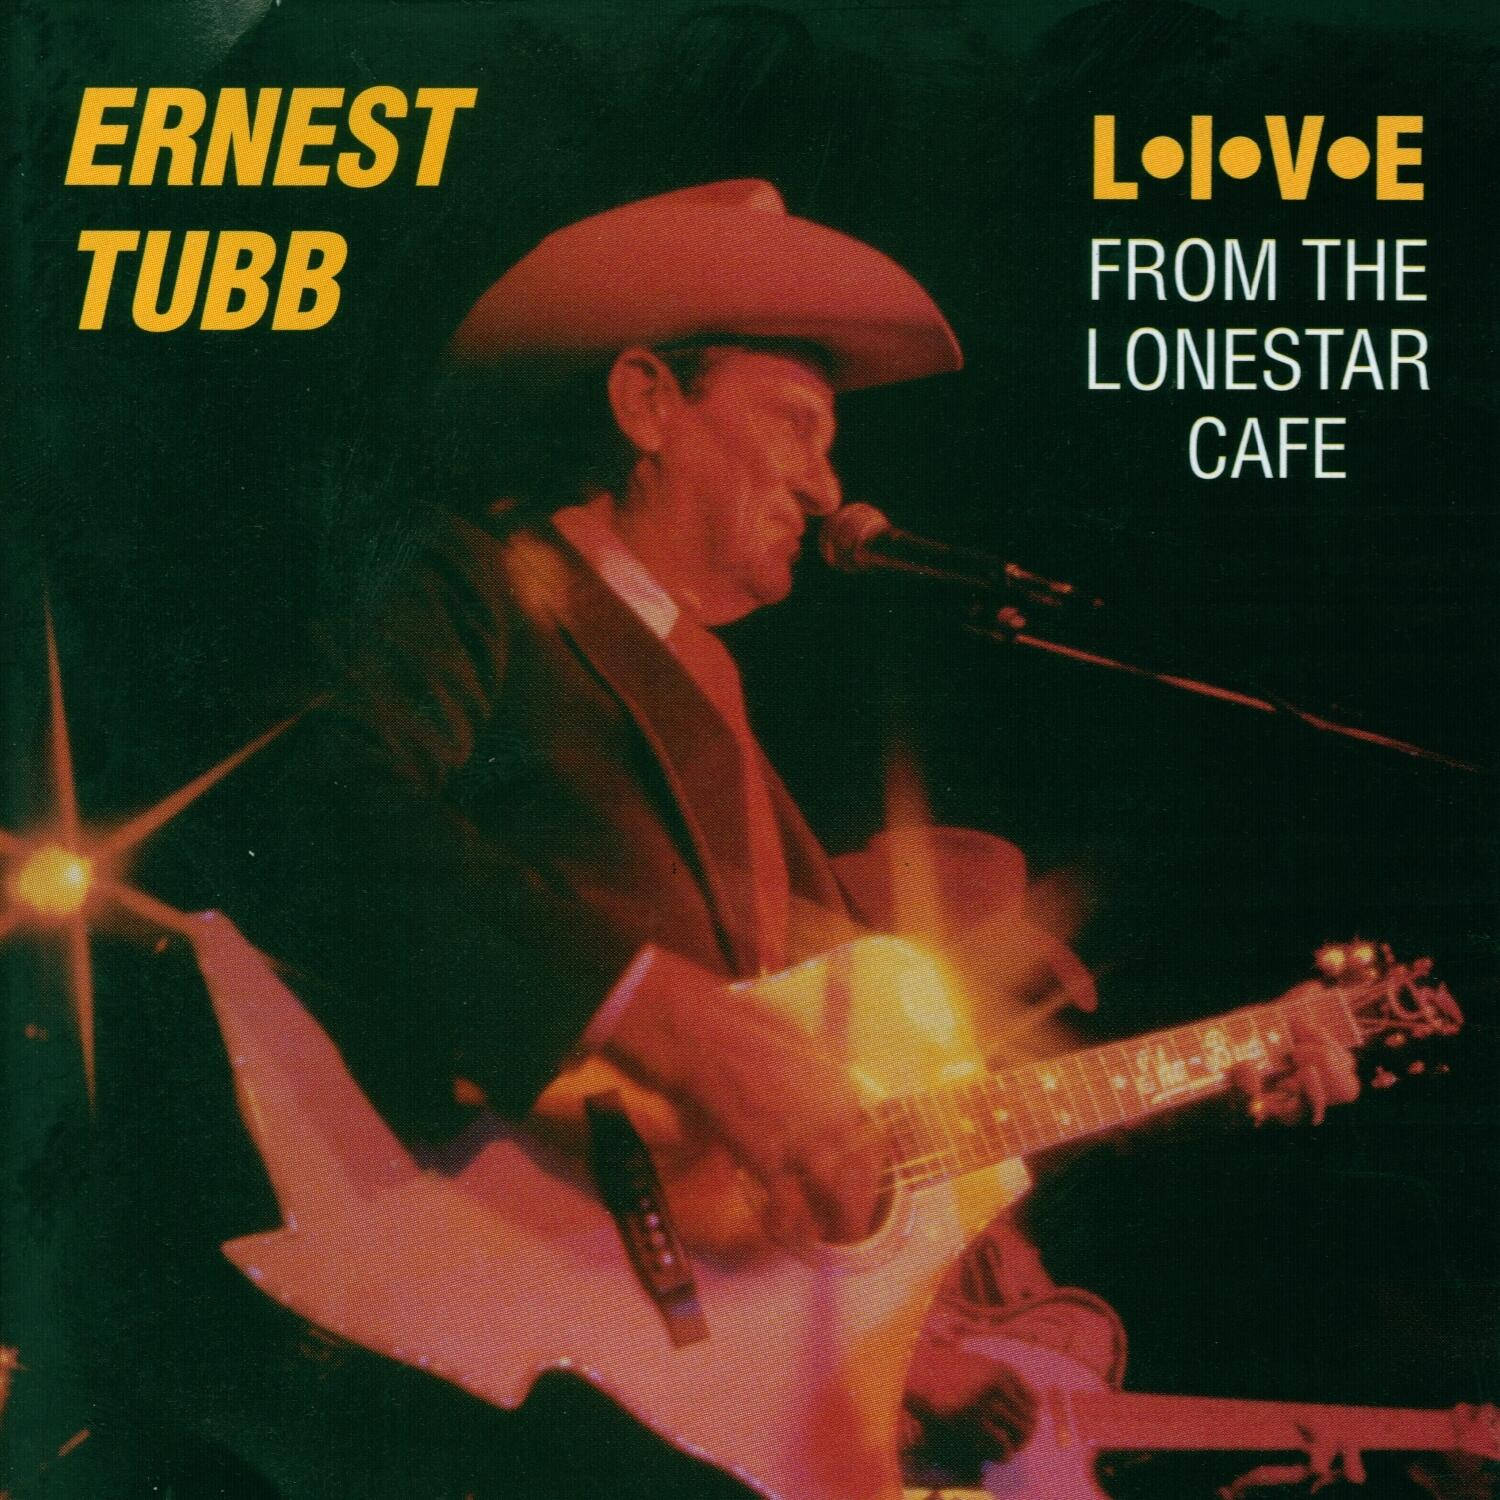 Caption: Legendary Country Music Star Ernest Tubb holding Waltz Across Texas Album. Wallpaper